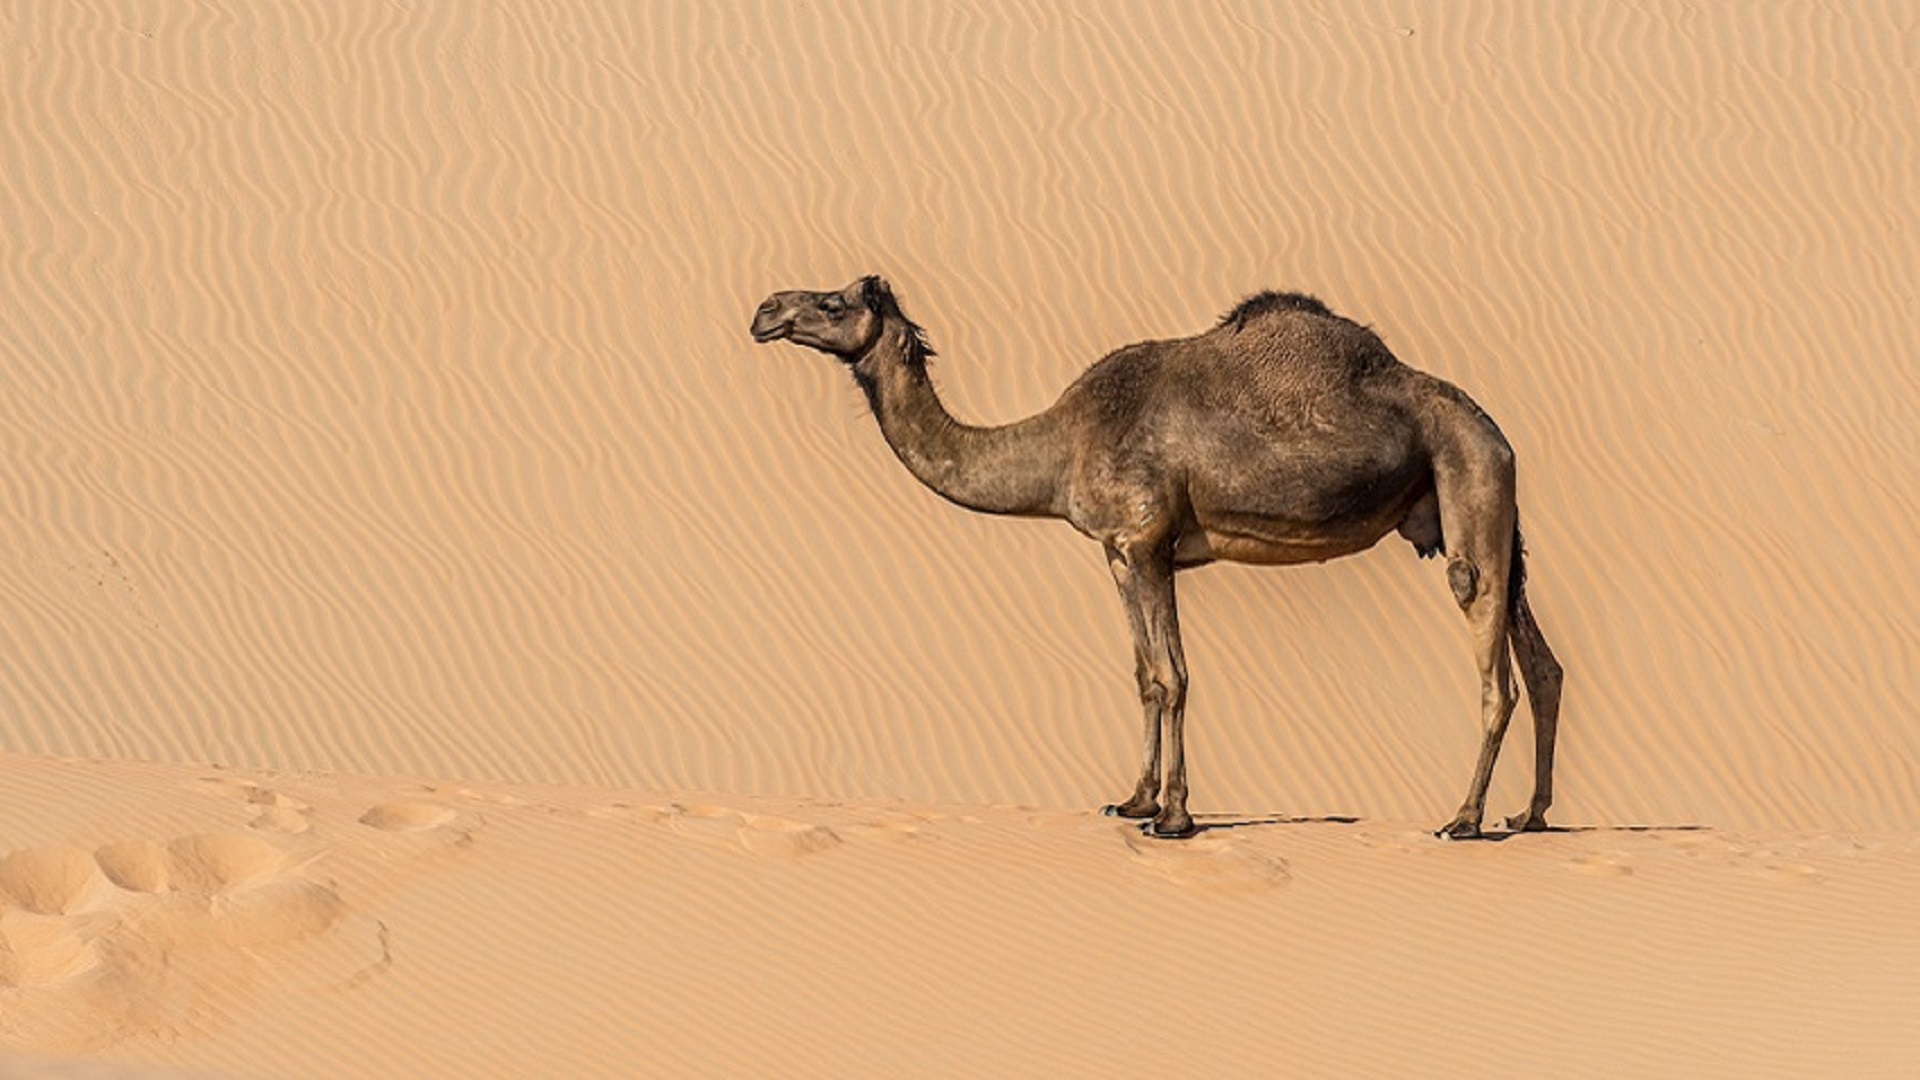 Lone camel